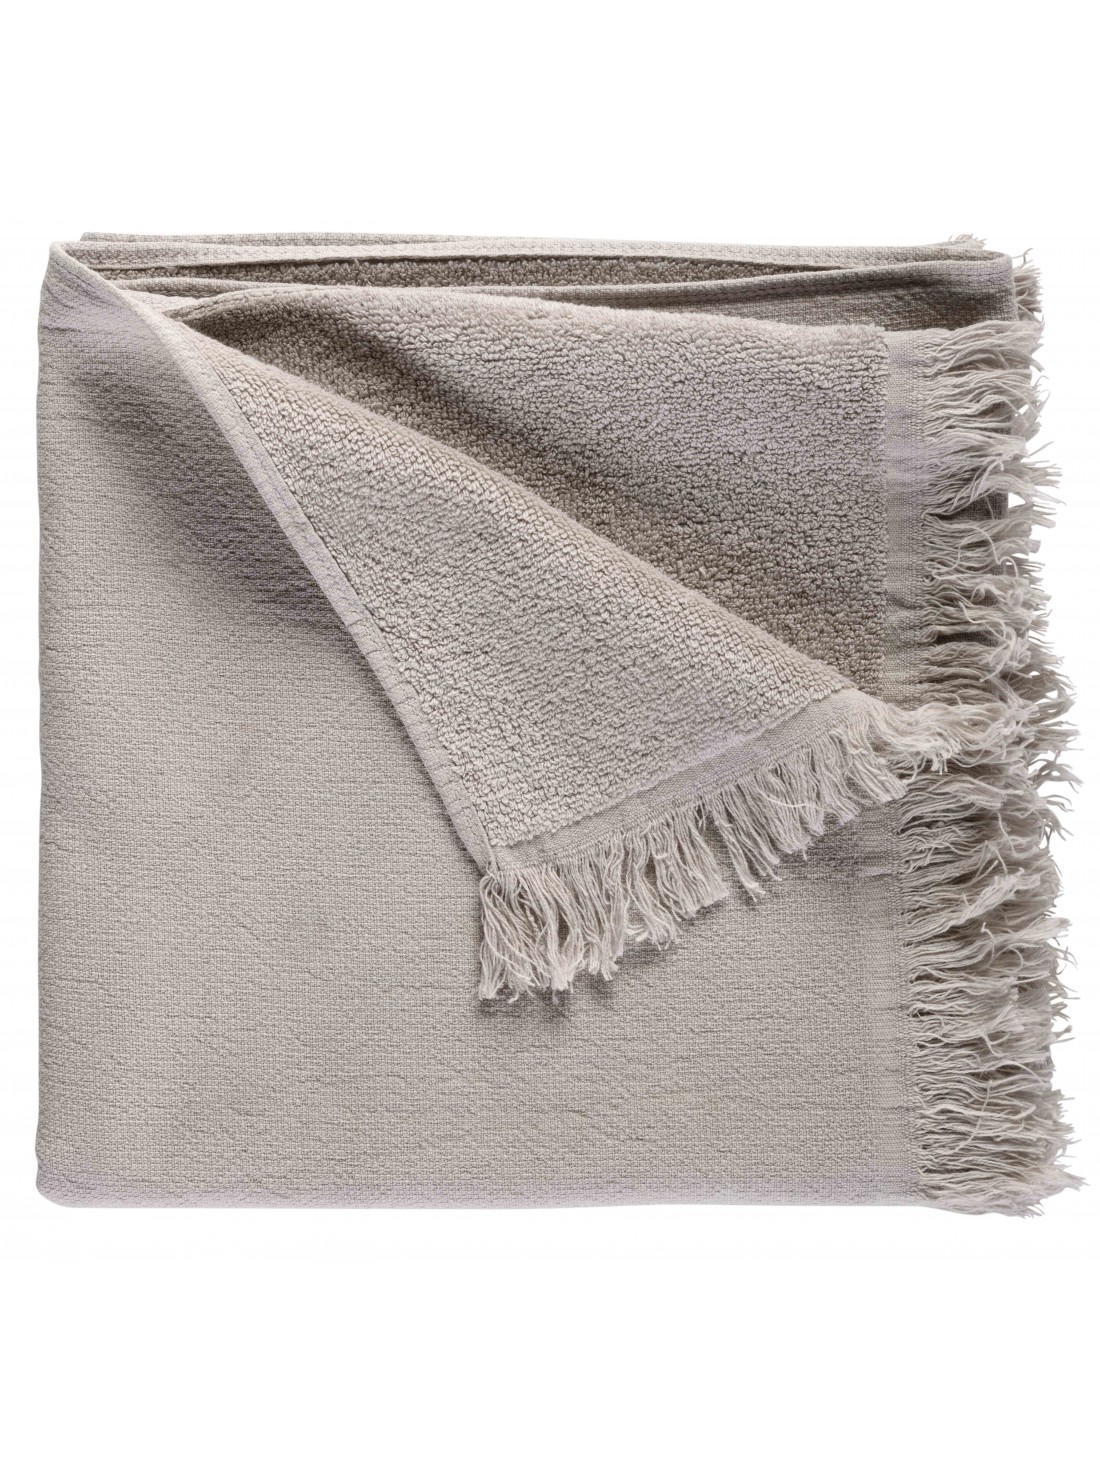 Bath towel organic cottonLuna fleur de sel 50